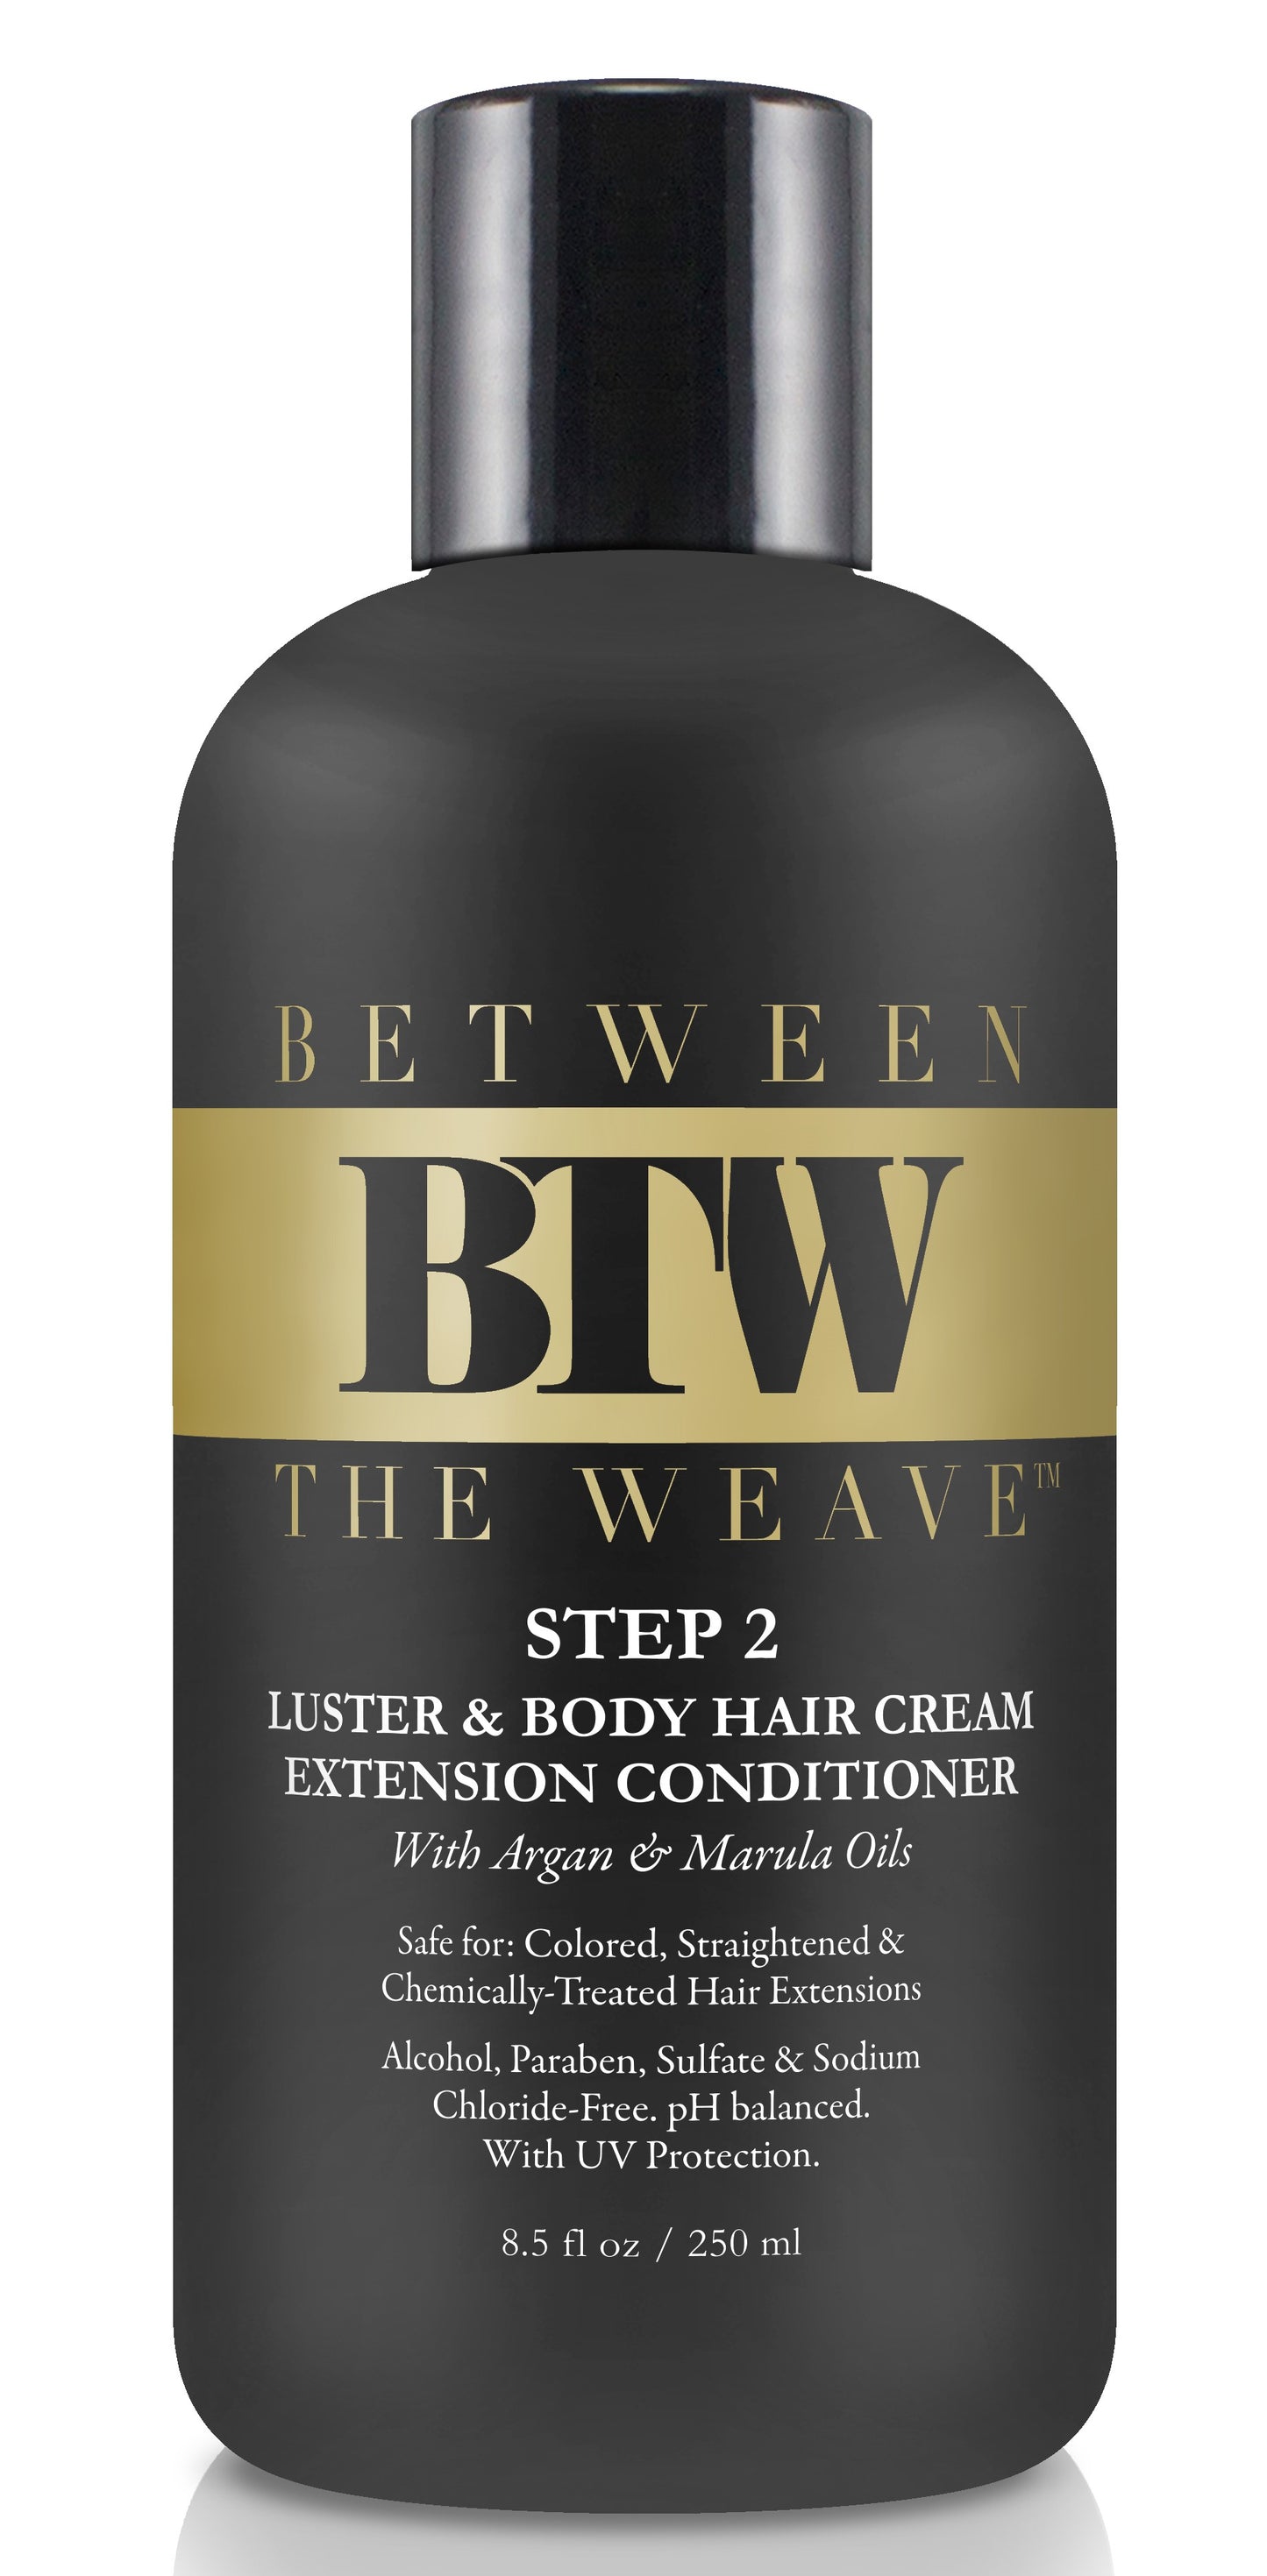 STEP 2- LUSTR & BODY HAIR EXTENSION CONDITIONER